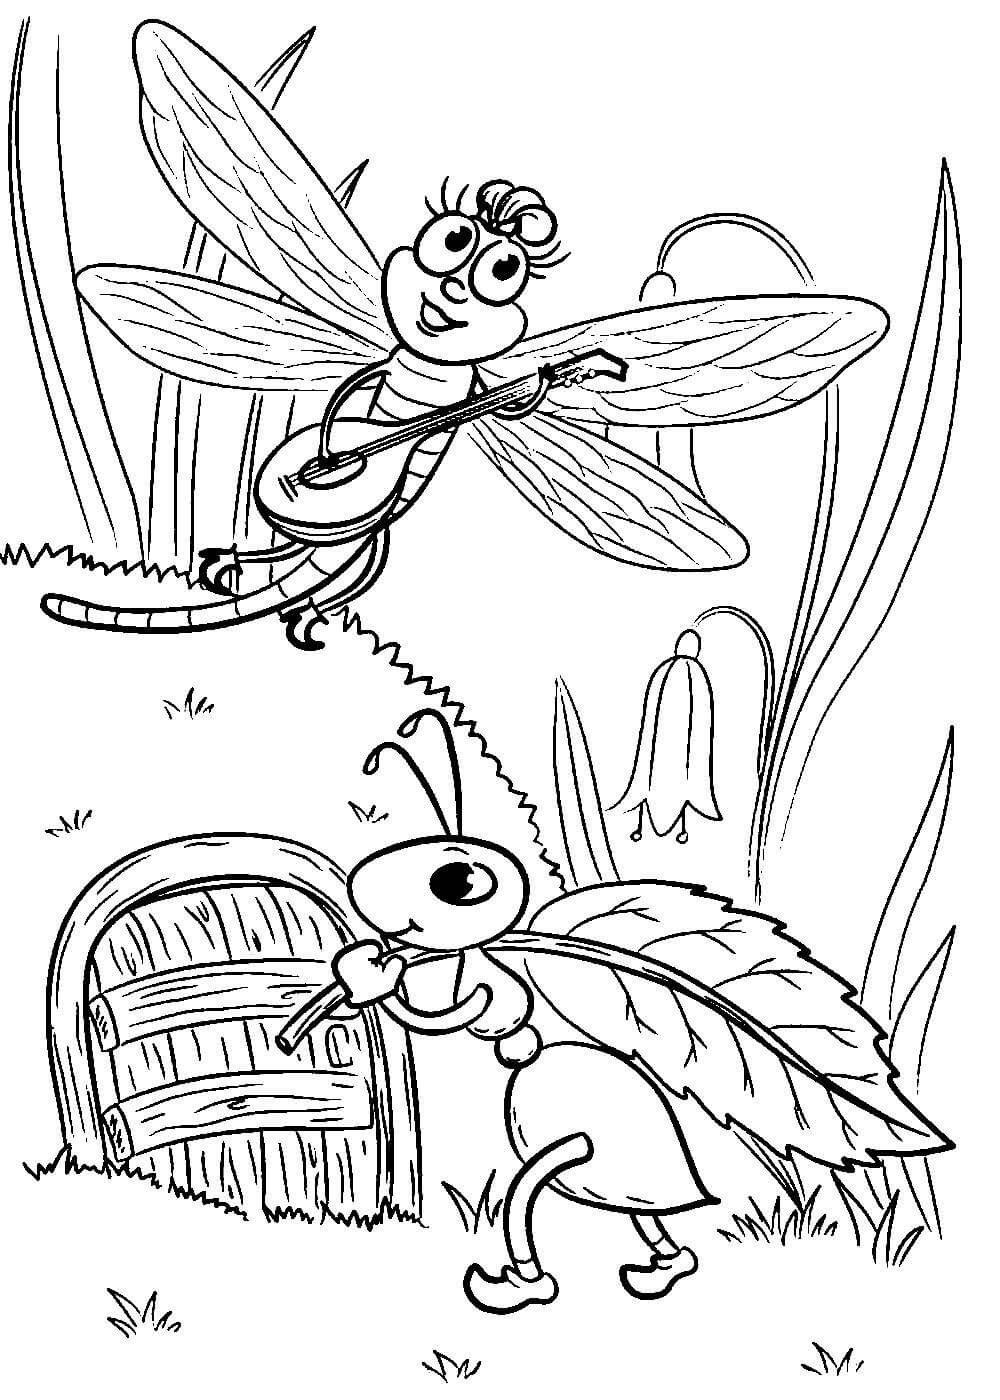 Стрекоза и муравей басня рисунок карандашом